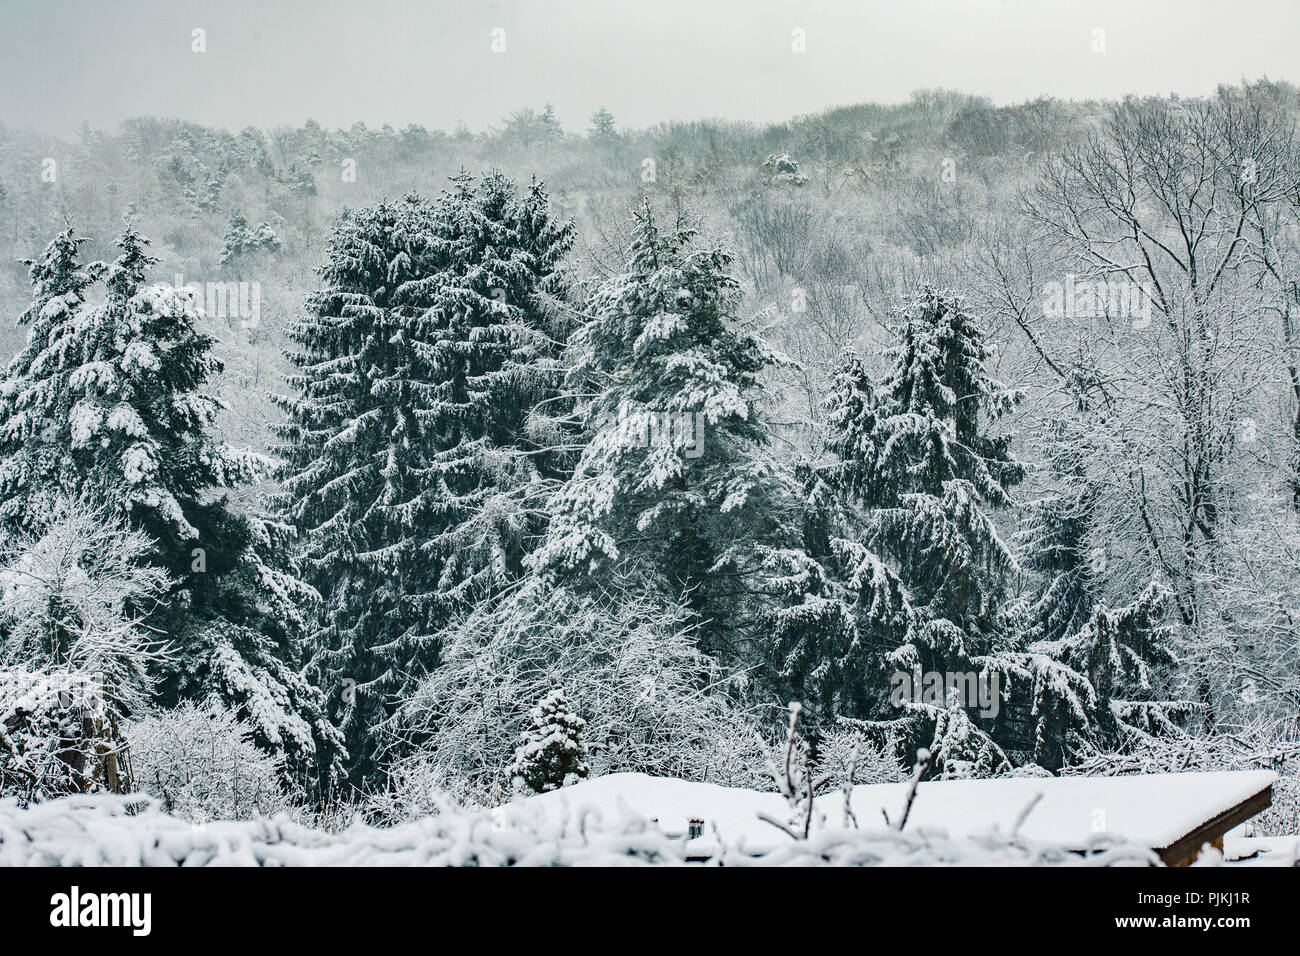 Abeti con neve e alberi innevati in background Foto Stock